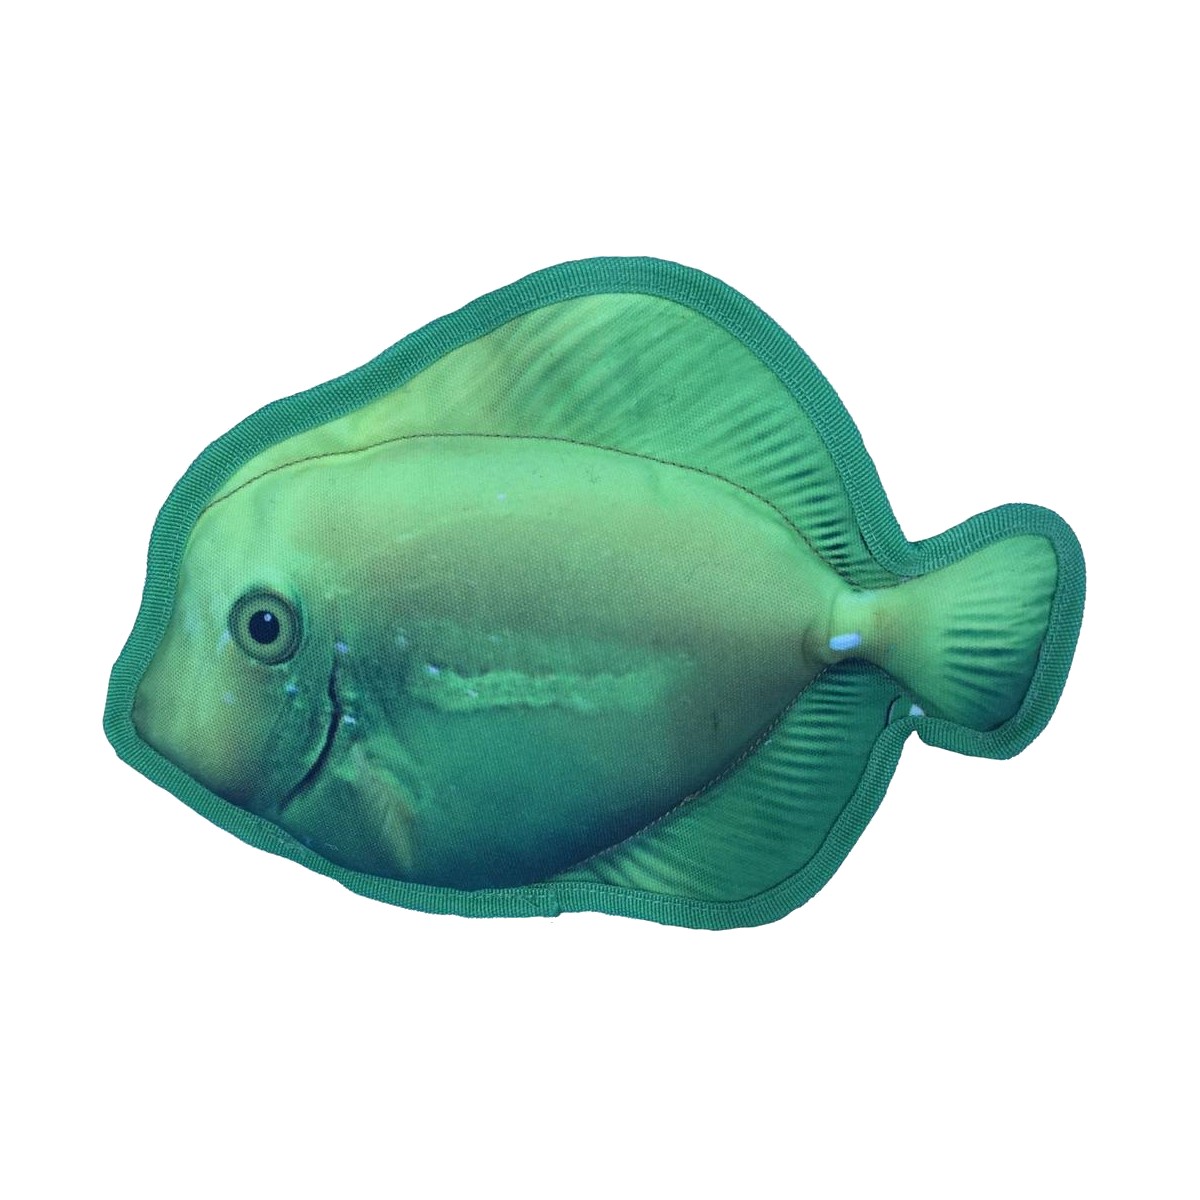 Dogline Tropical Fish Dog Toy - Surgeonfish